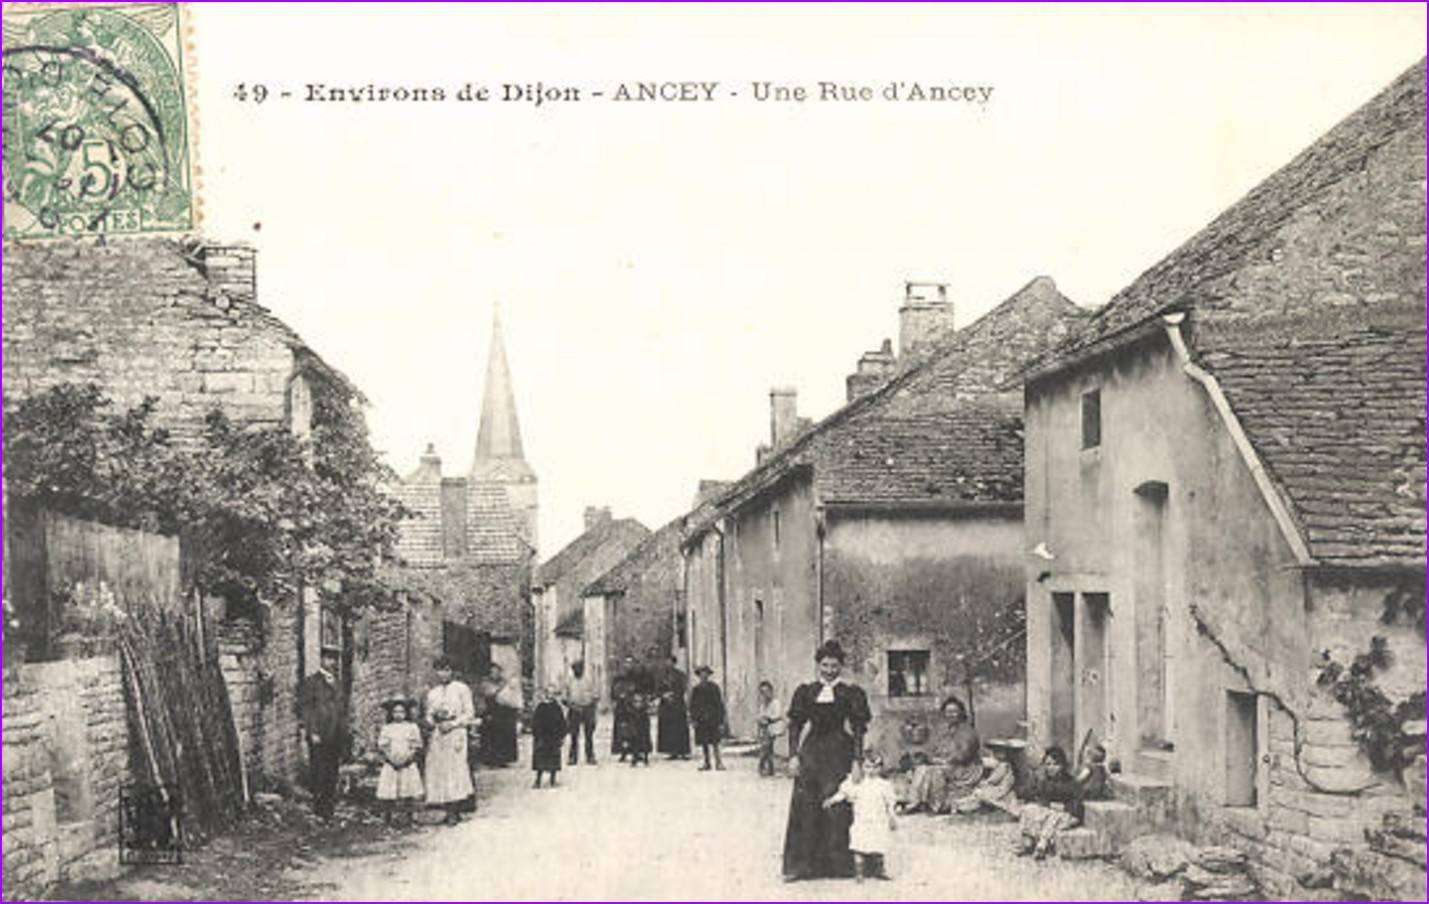 Une rue d'Ancey